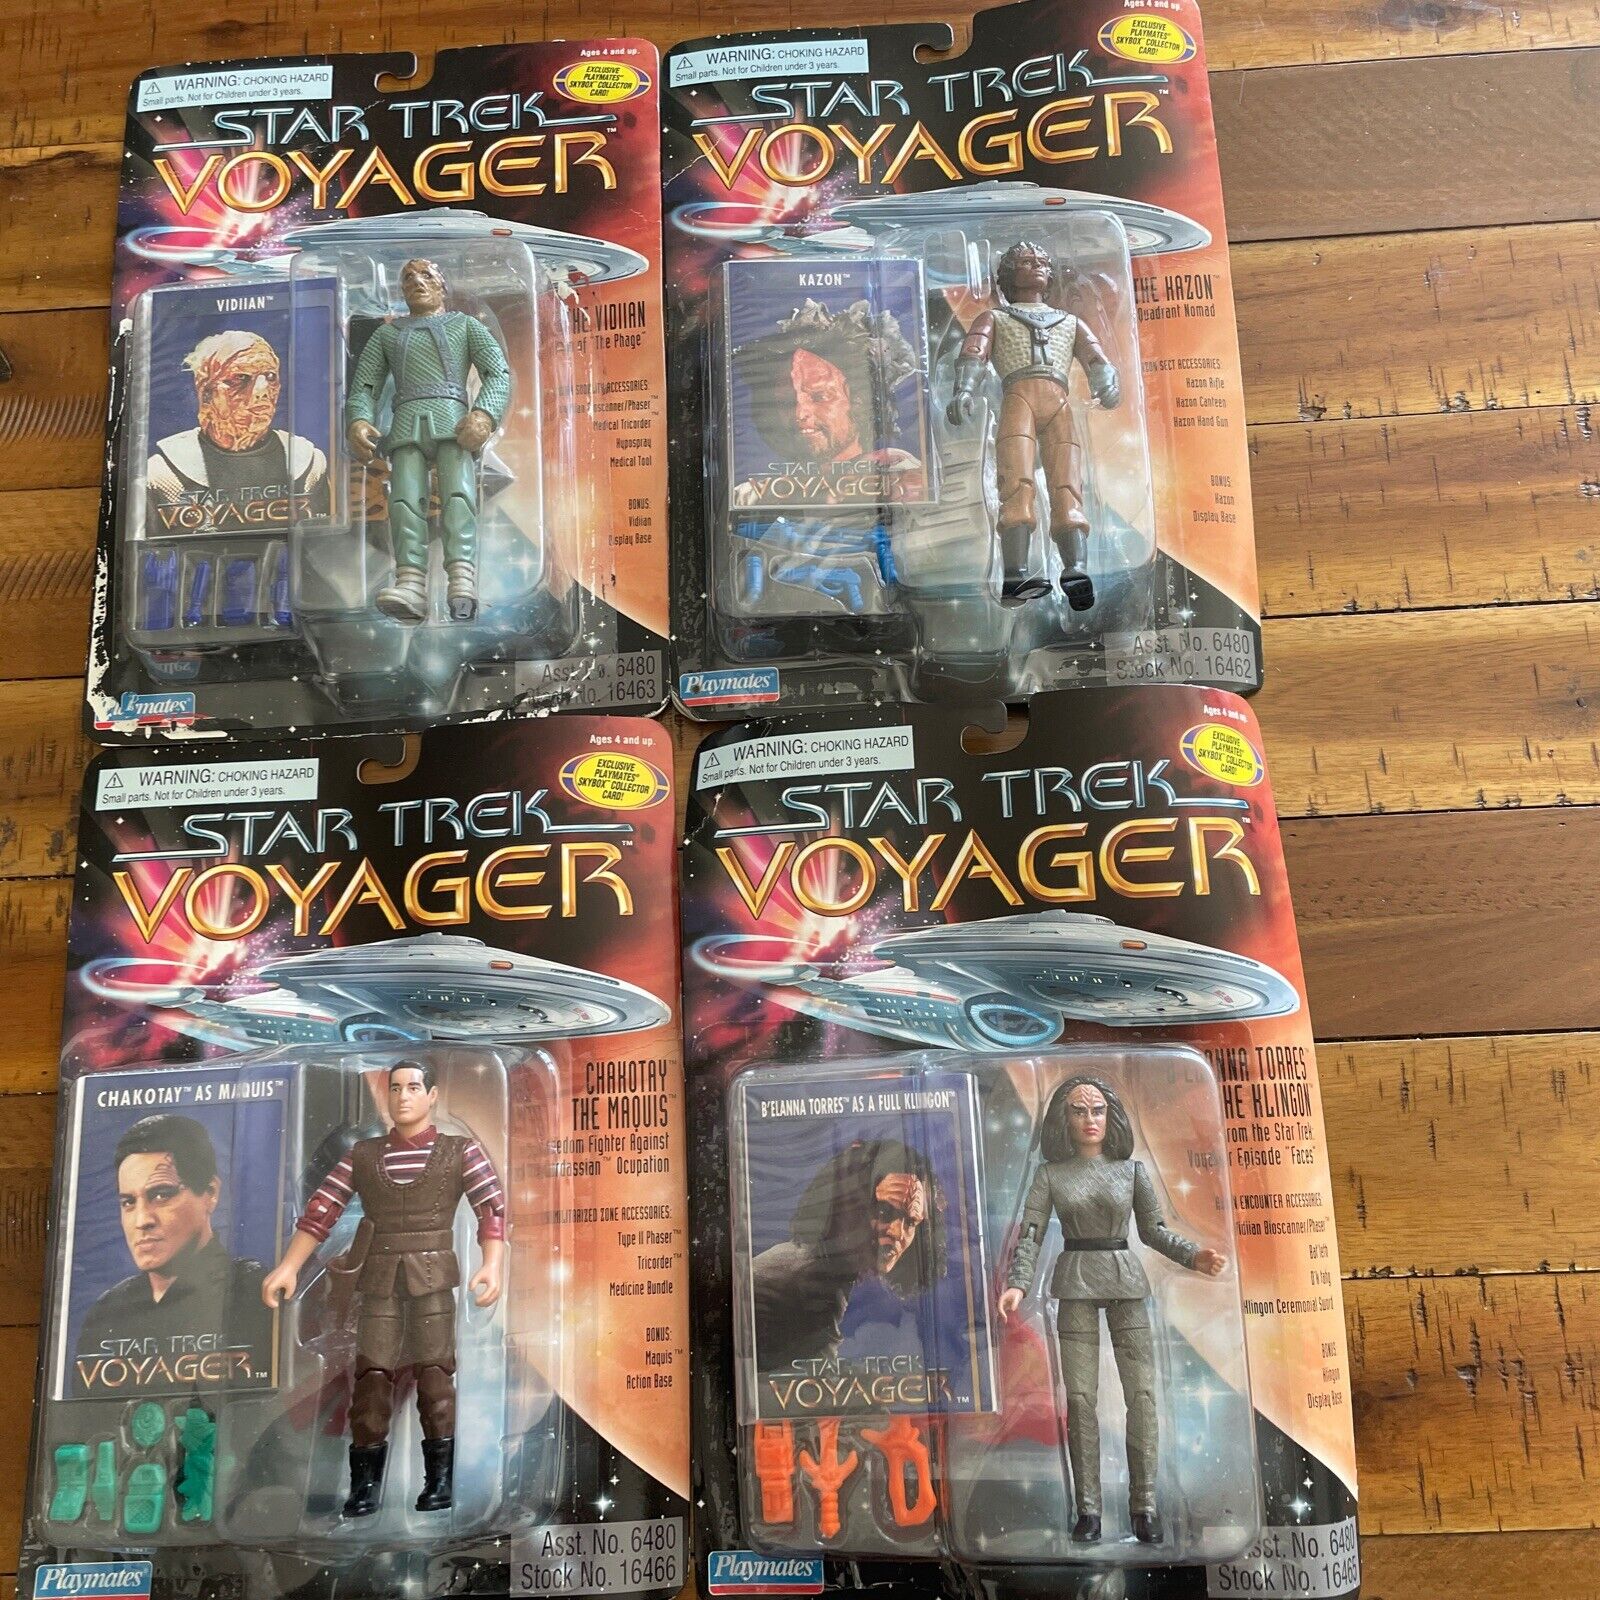 1996 Playmates Star Trek Voyager Action Figures (Lot of 4)